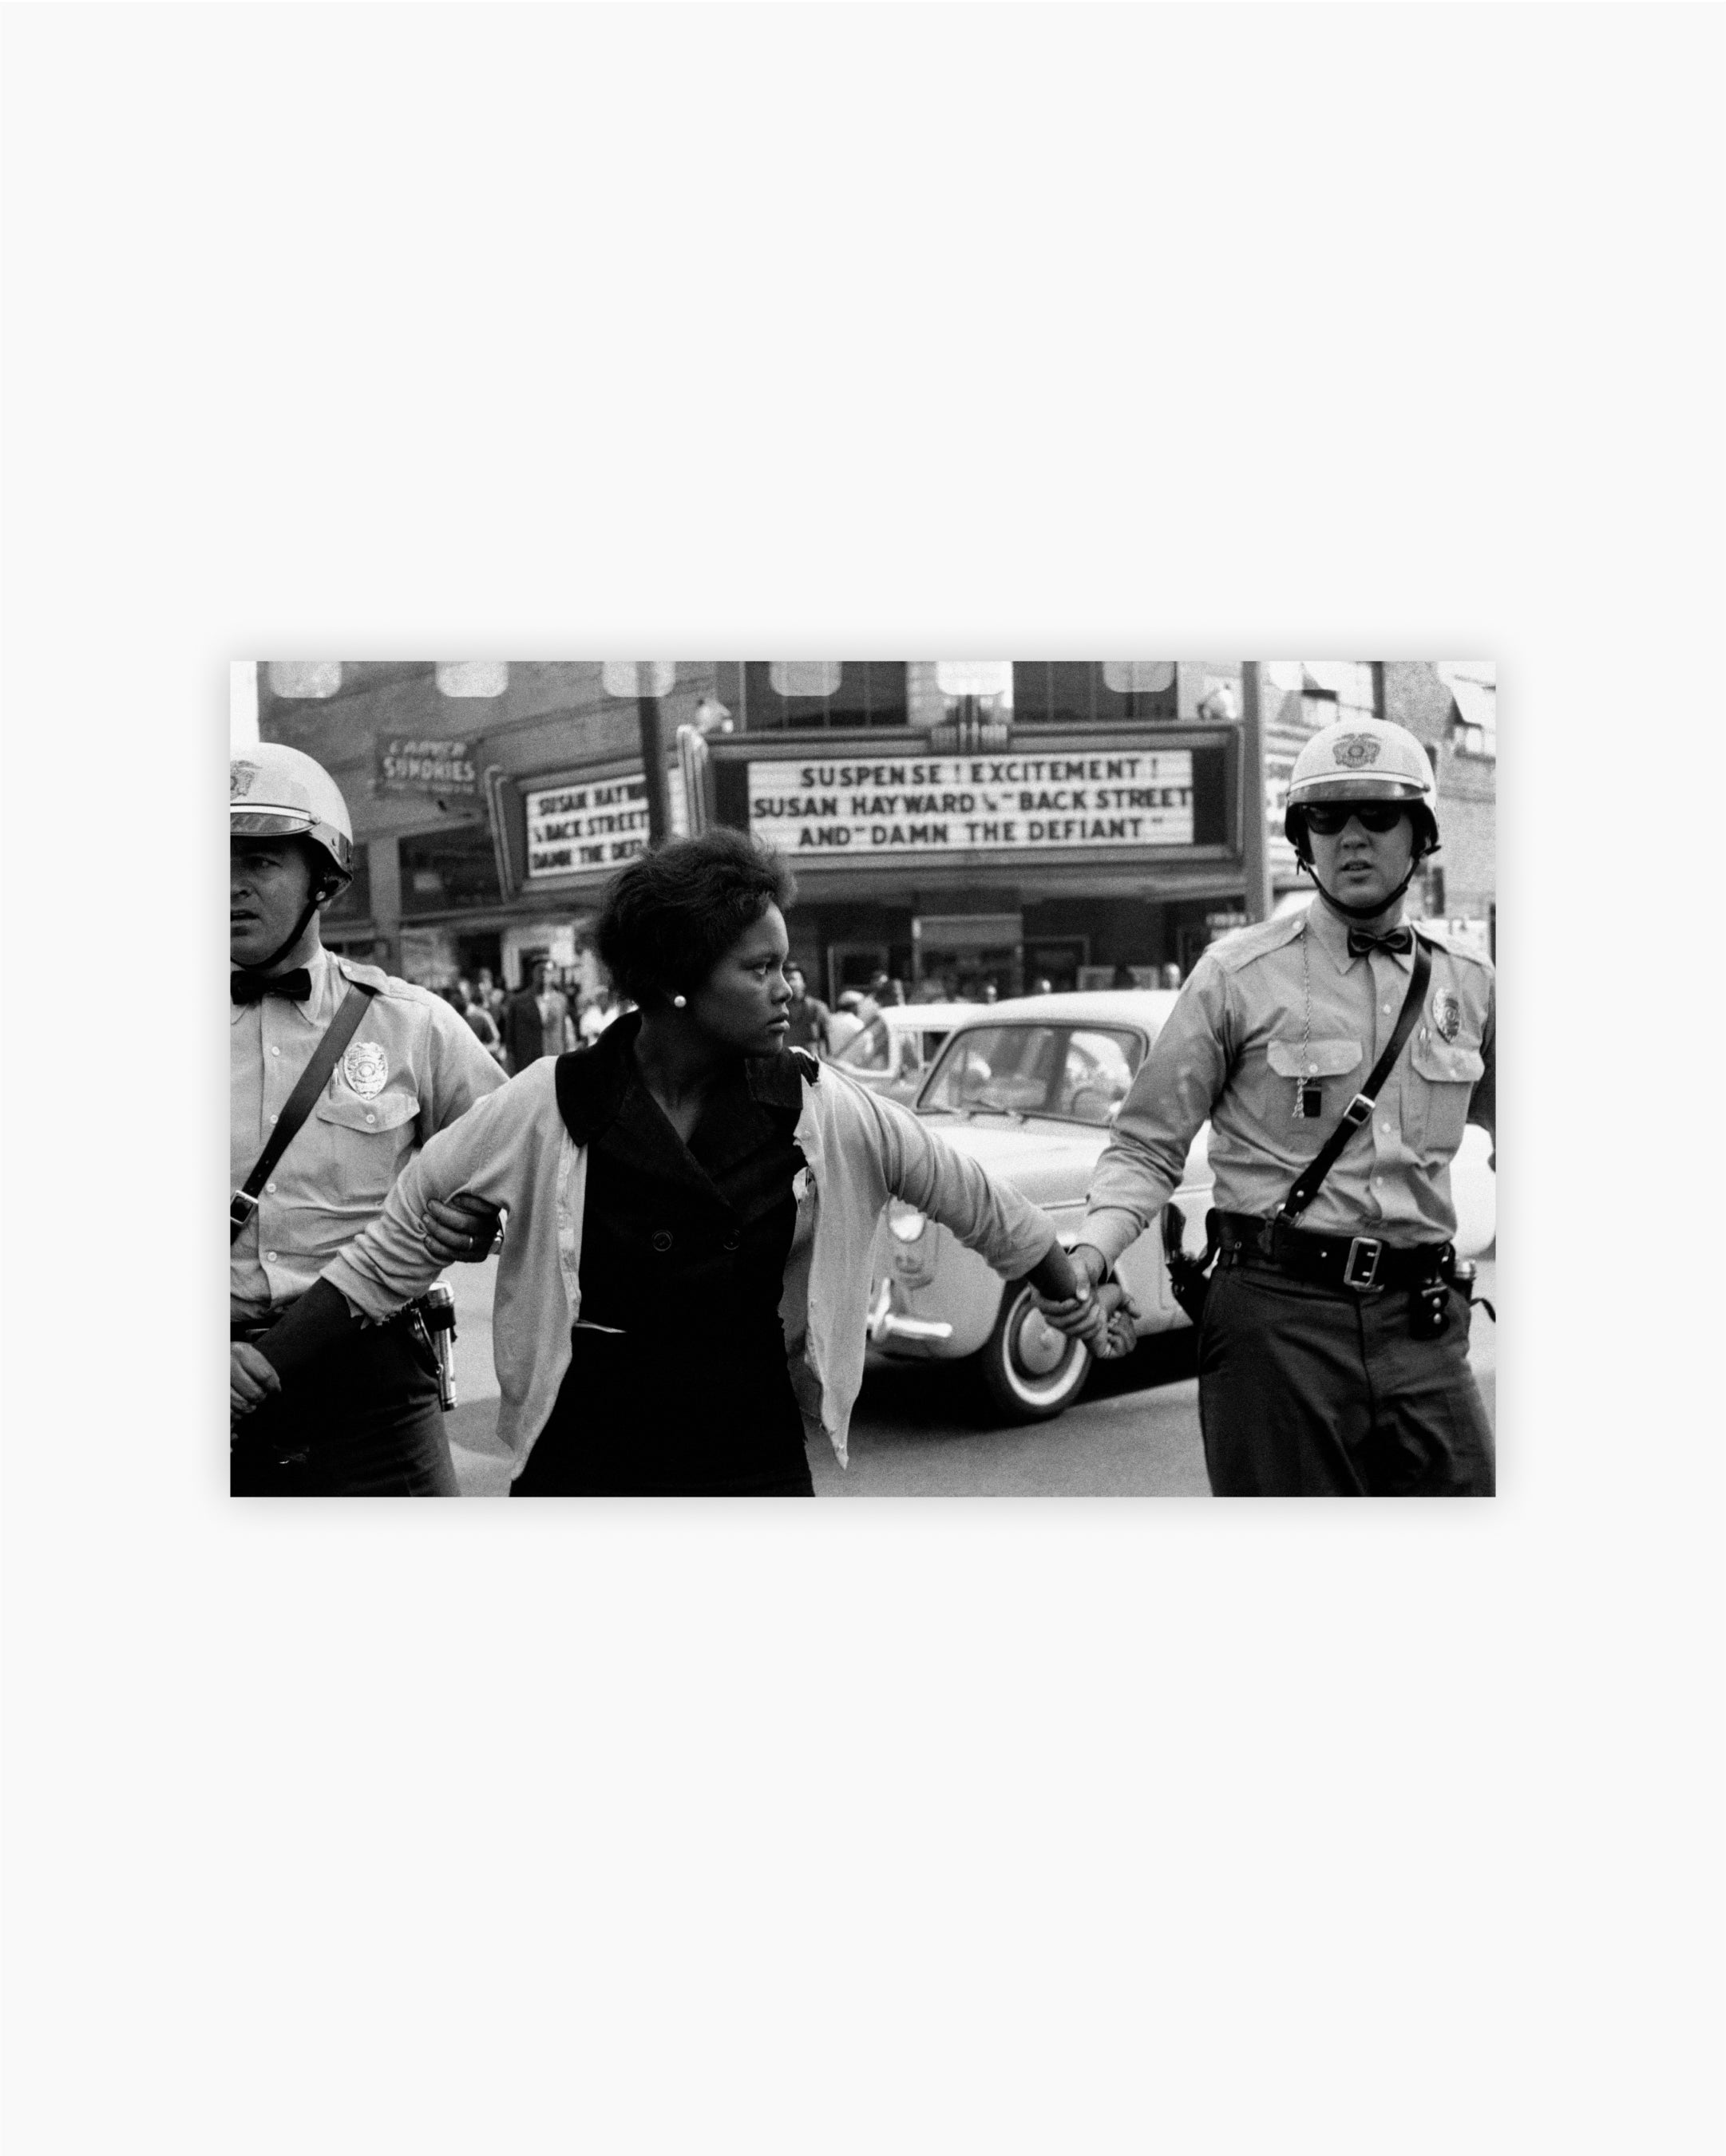 Arrest of a demonstrator. Birmingham, Alabama, 1963